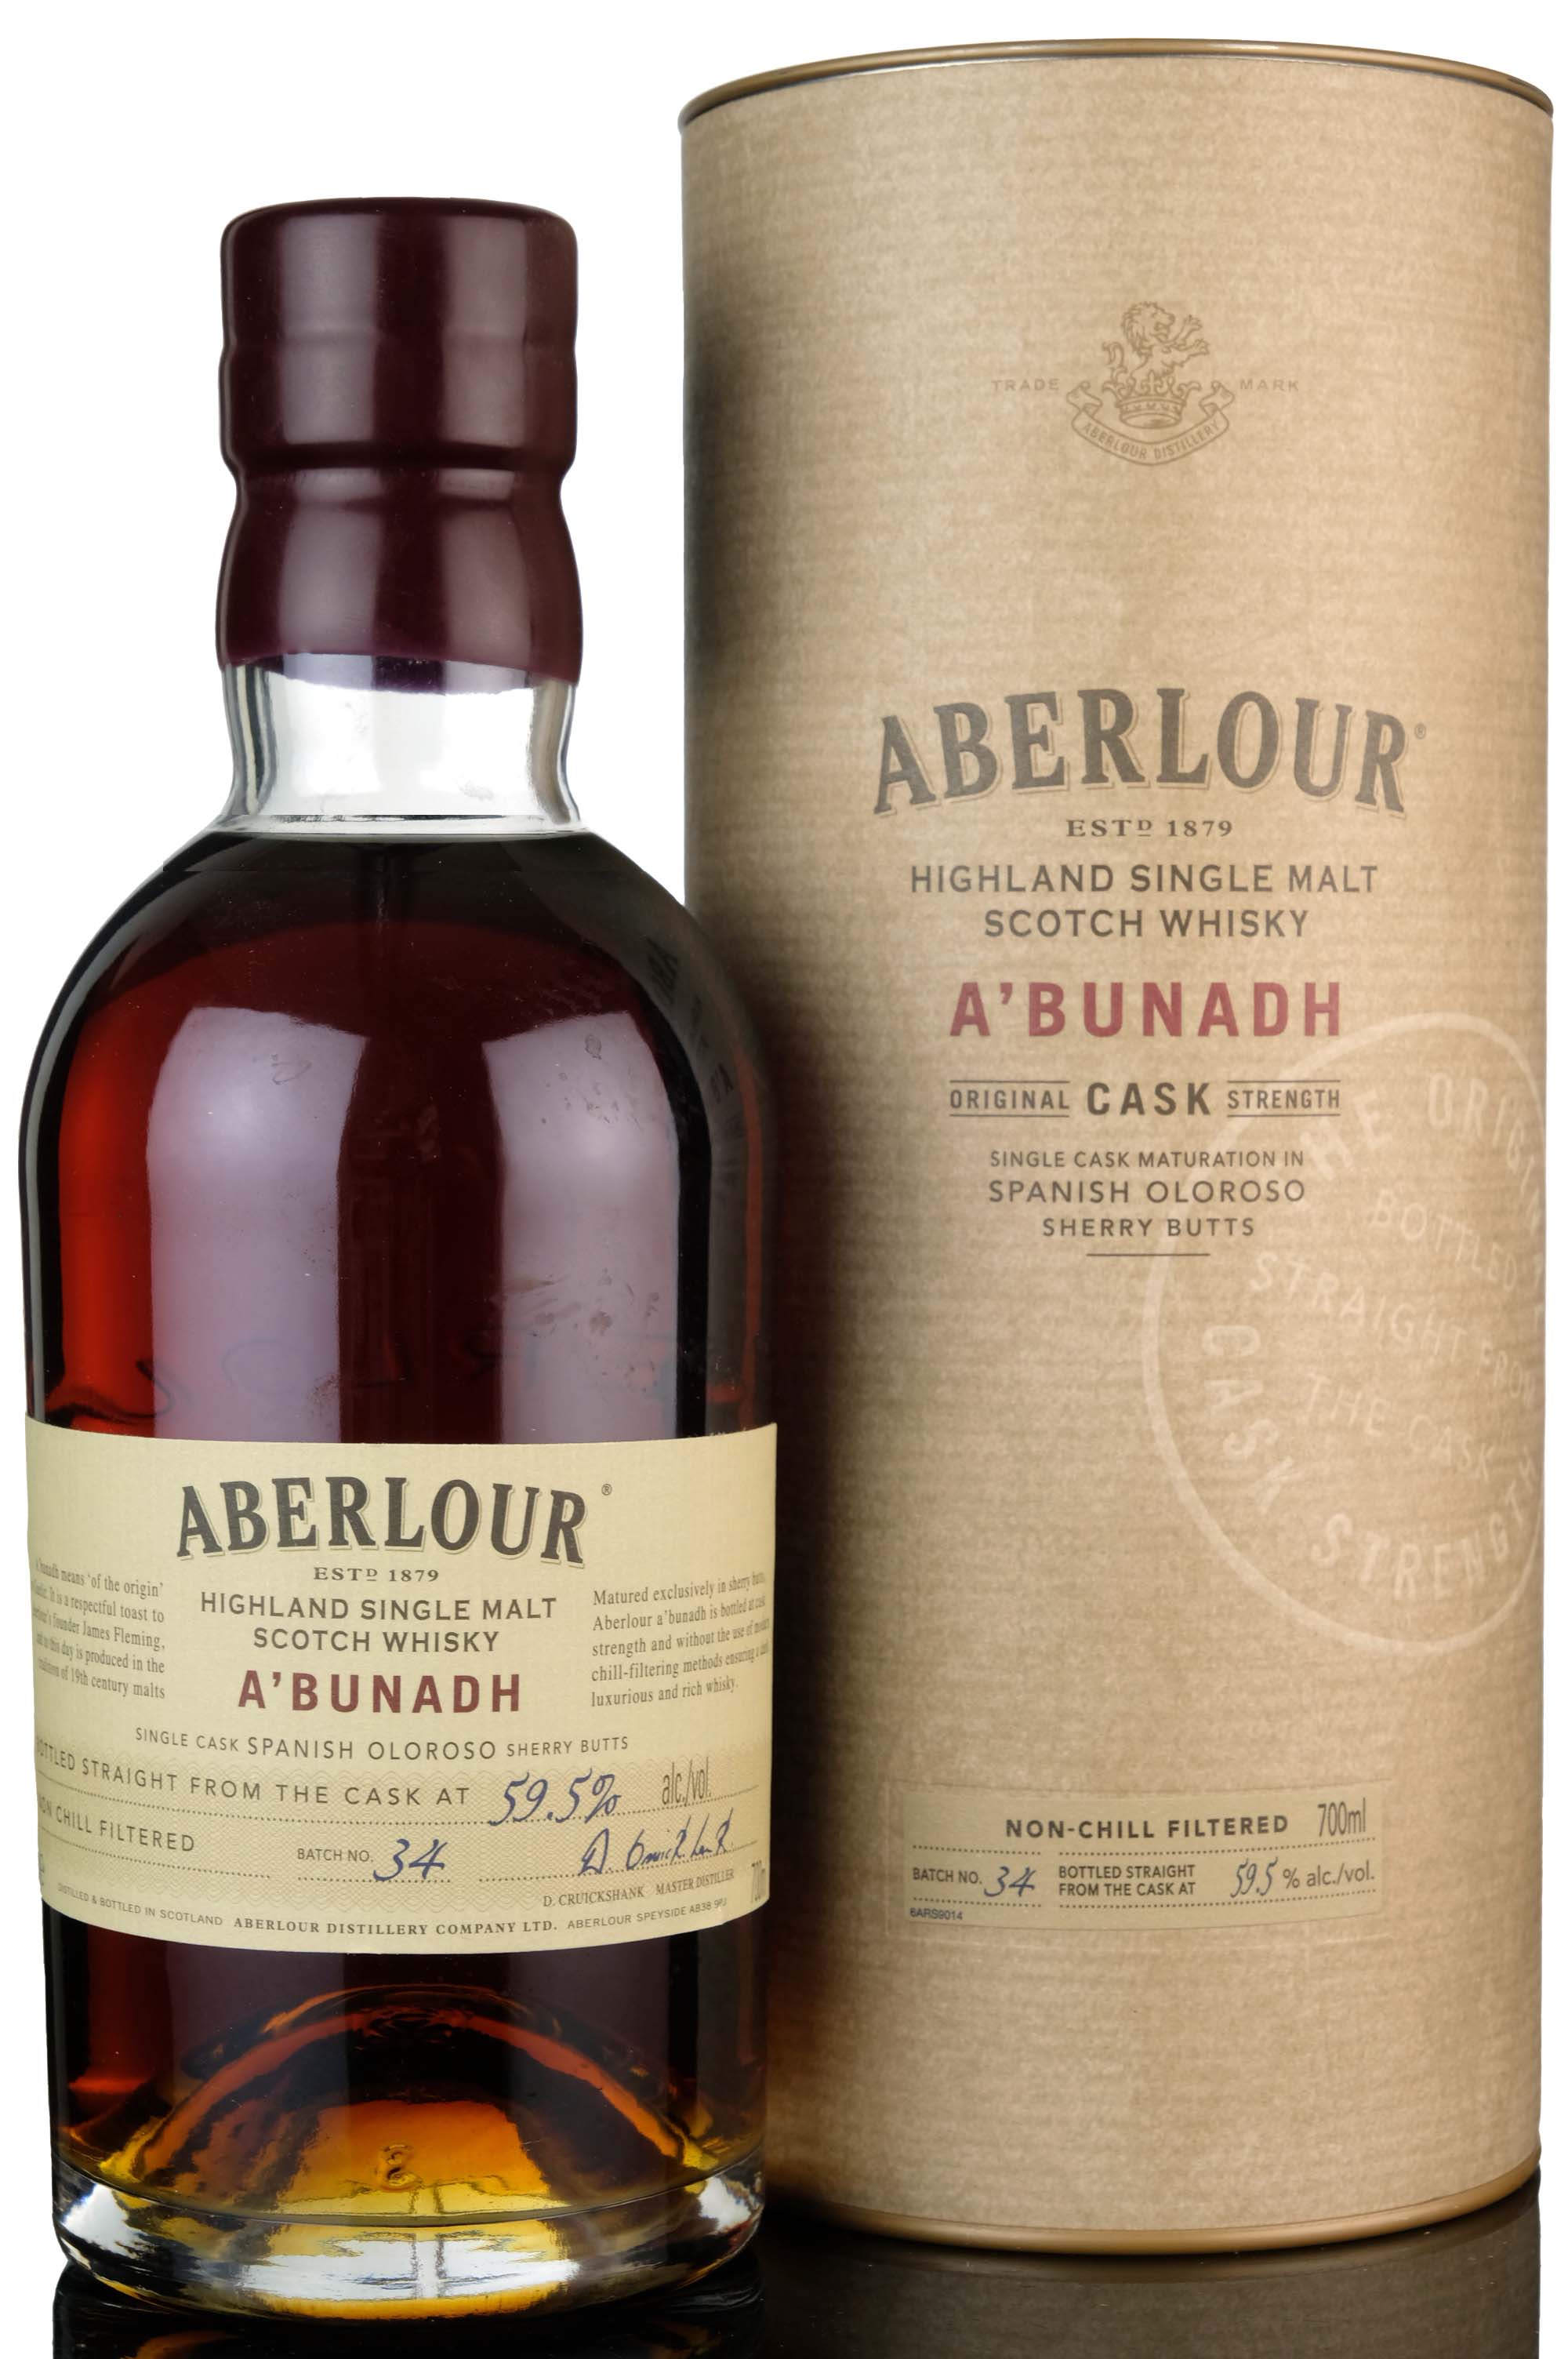 Aberlour Abunadh - Batch 34 - 2010 Release